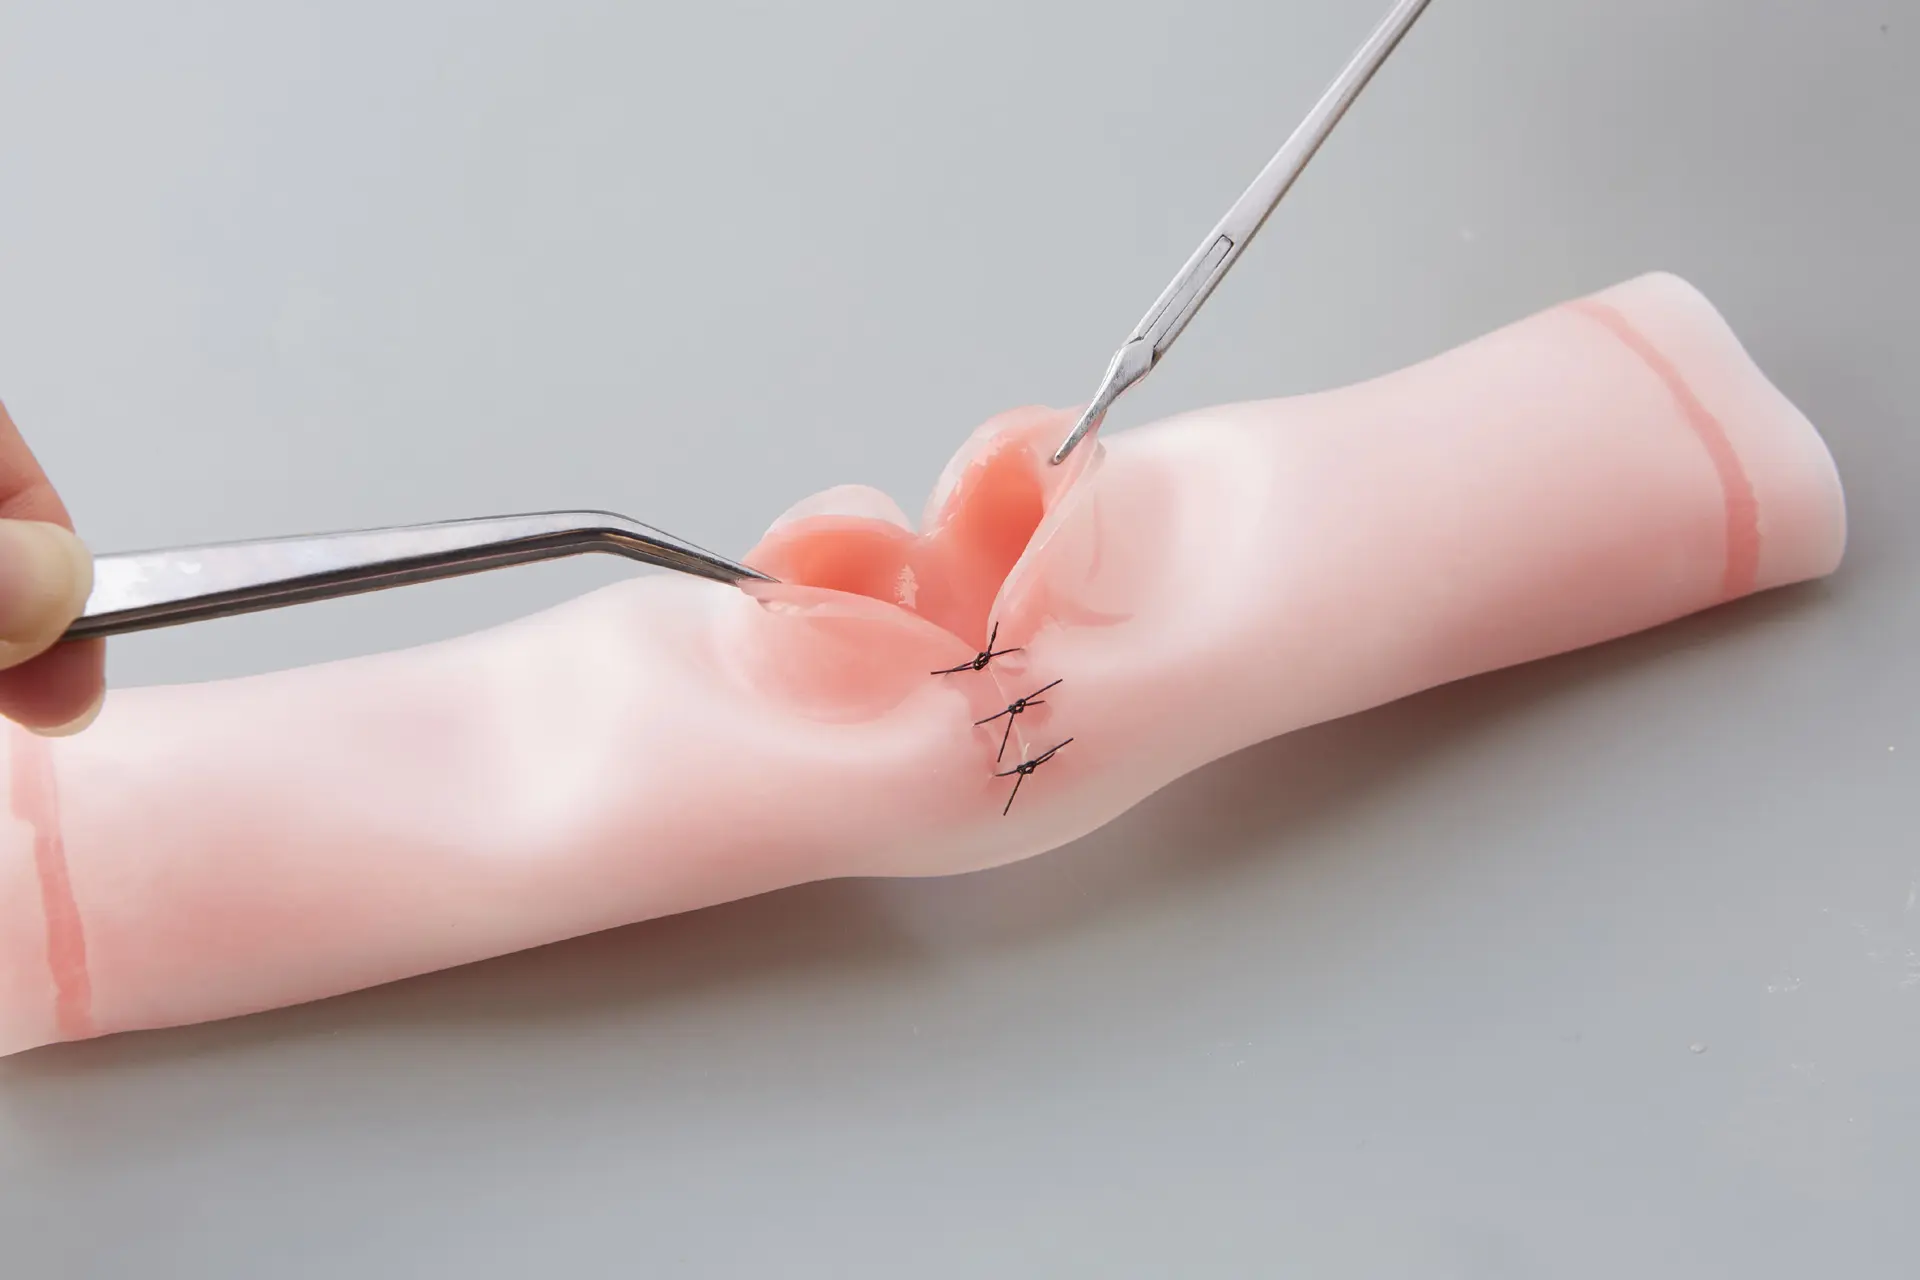 Two-layered intestinal suture model